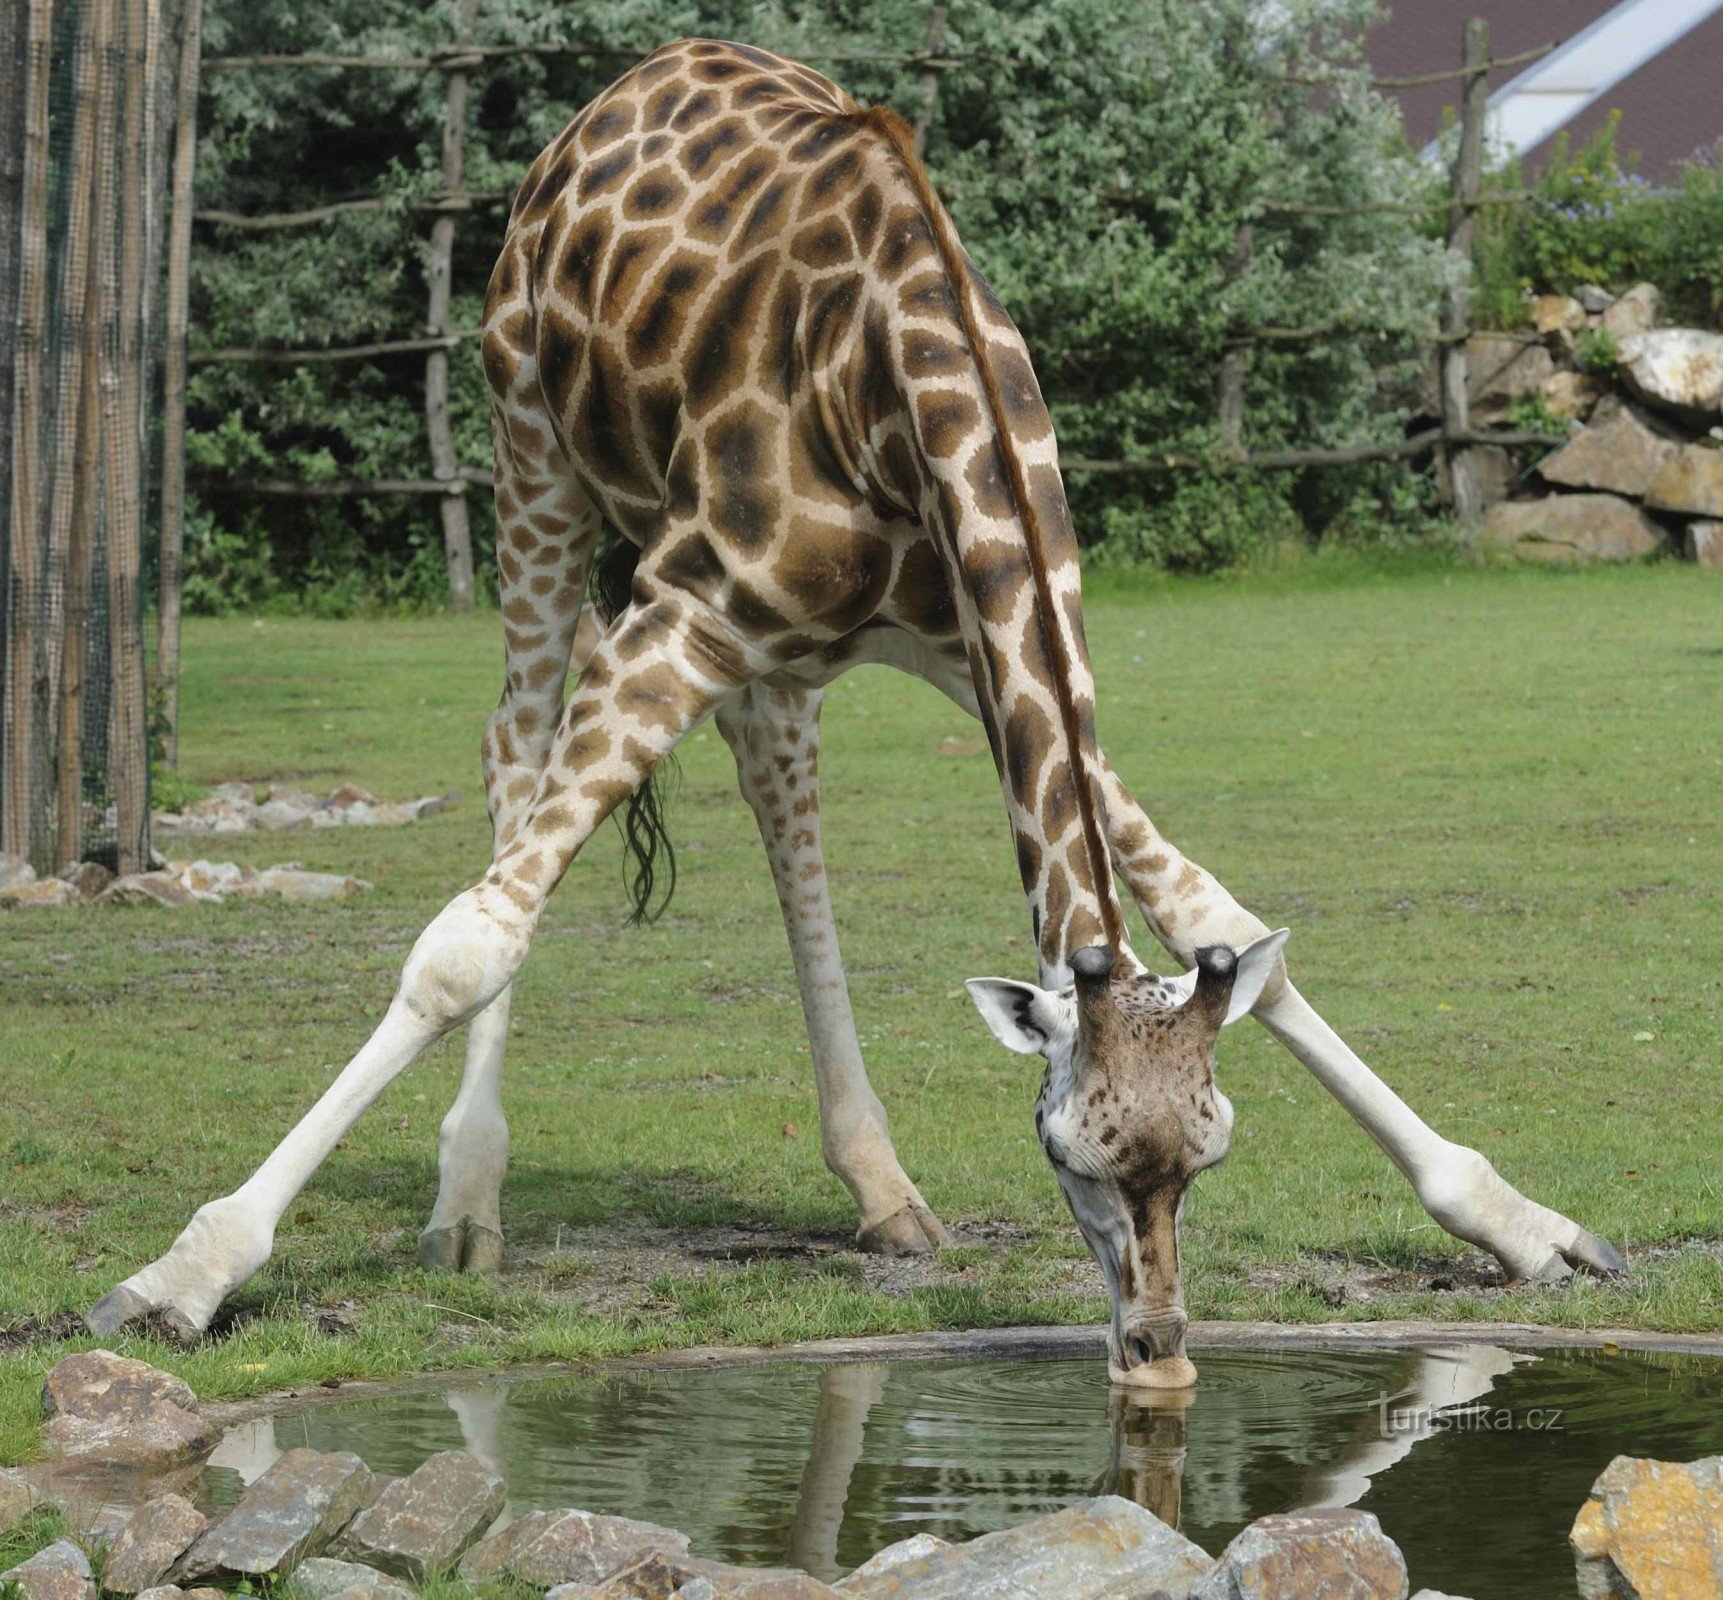 Hươu cao cổ Rothschild (Giraffa camelopardalis rothschildi)